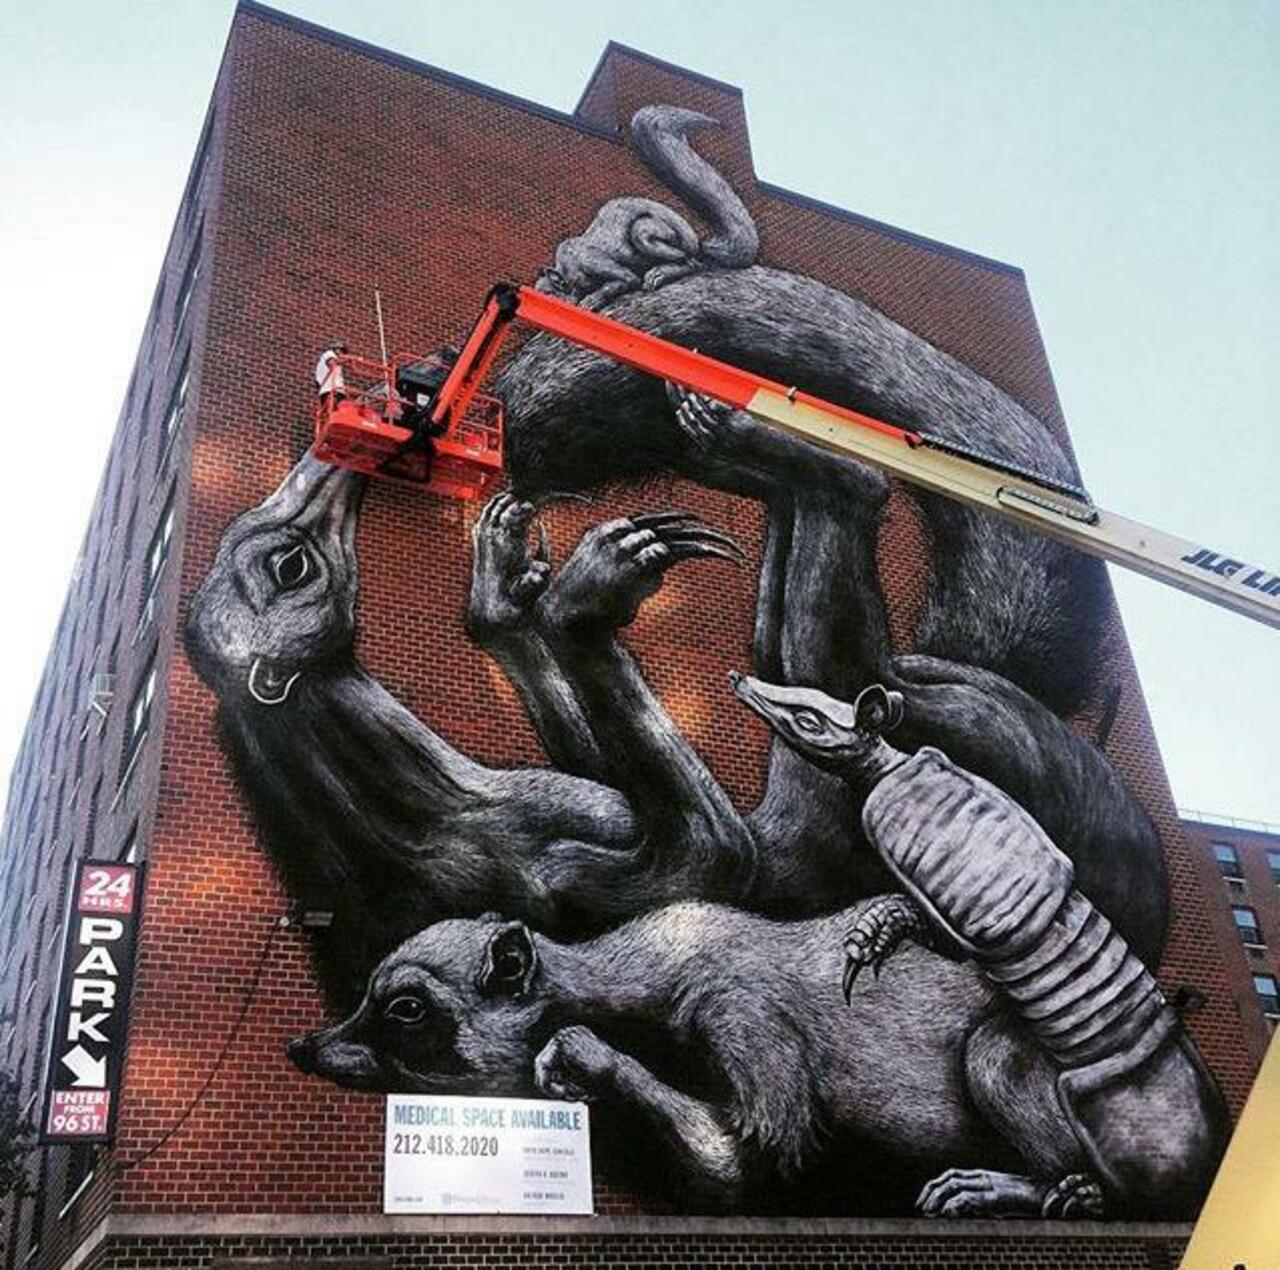 Street Art in progress by ROA in NYC

#art #graffiti #mural #streetart http://t.co/x92Witt3pH